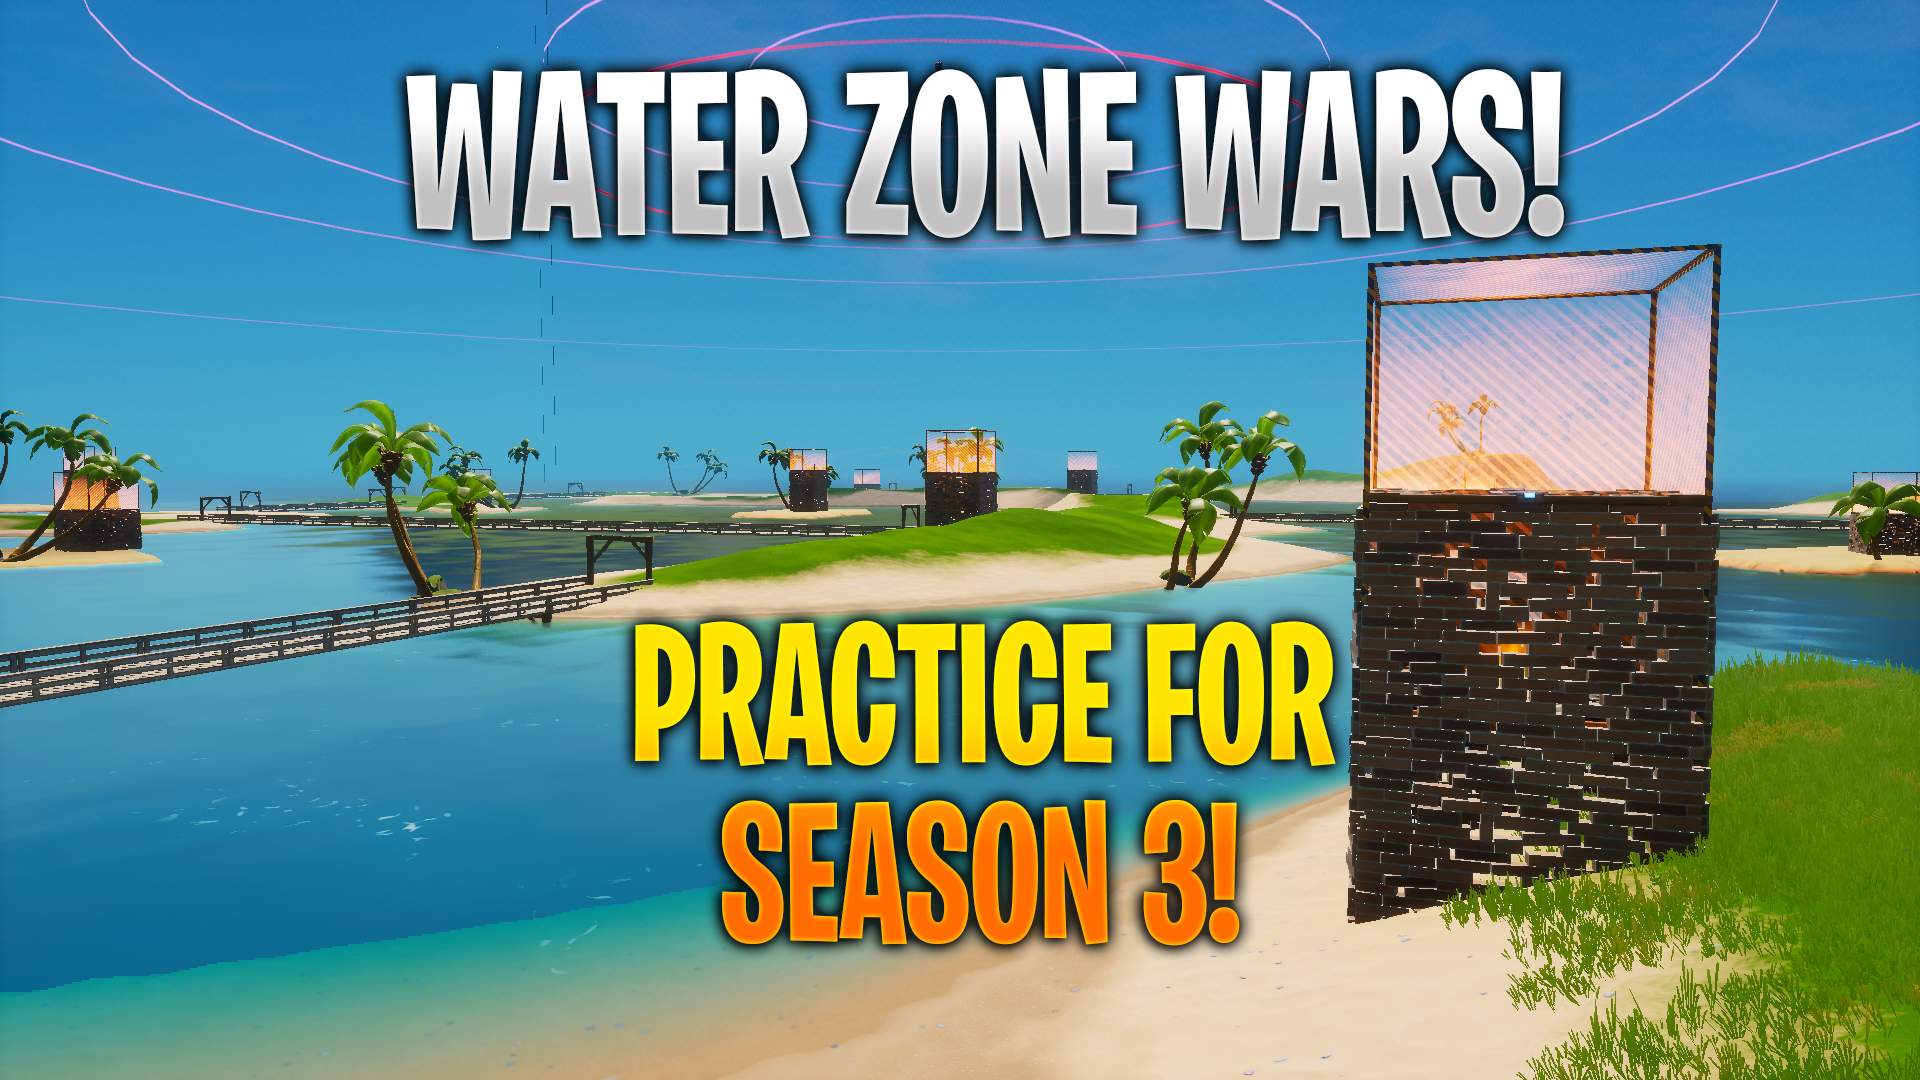 WATER ZONE WARS! image 2